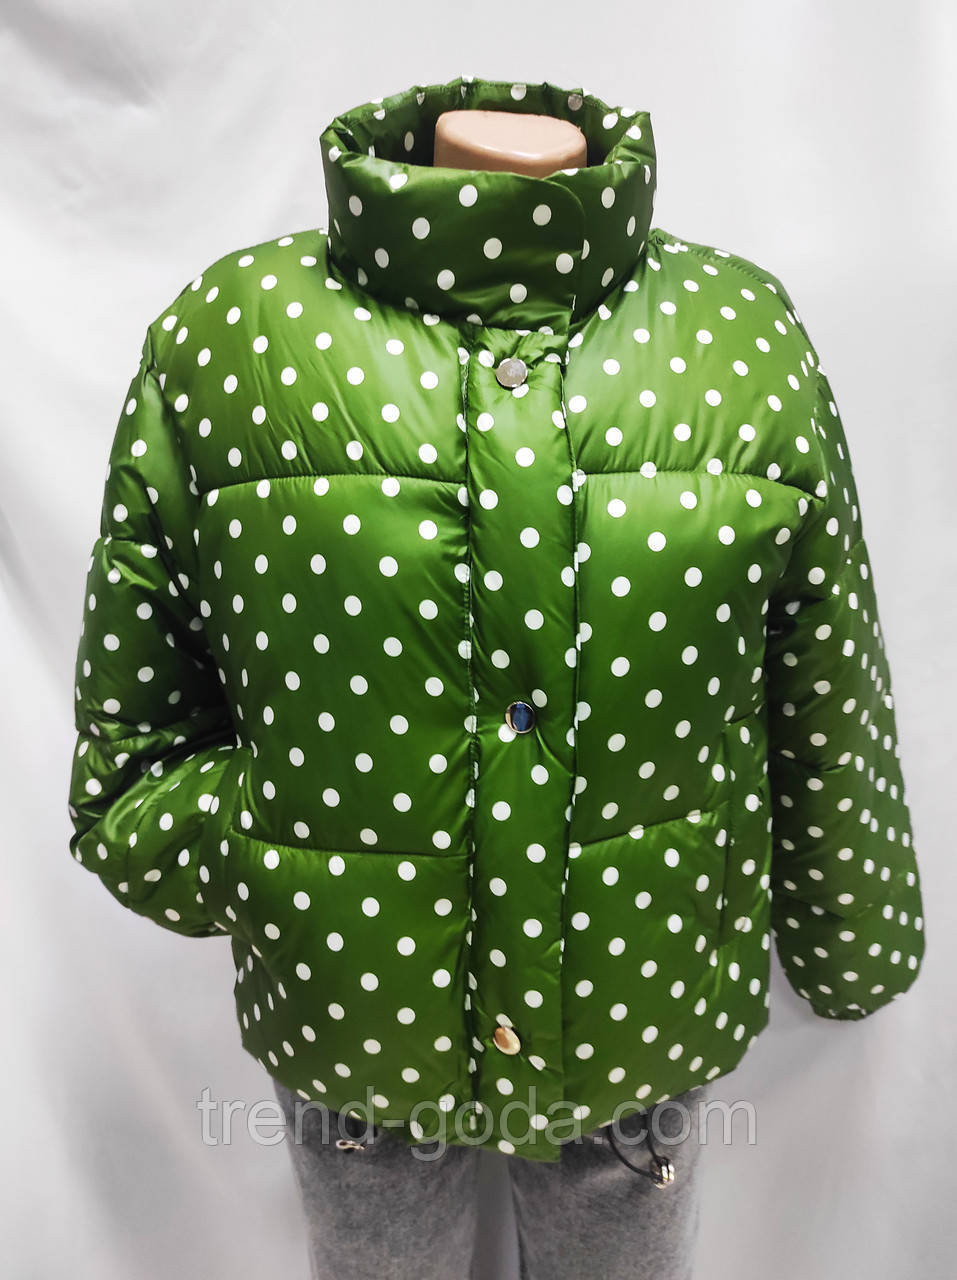 Куртка женская сезон осень/зима Куртка зимова жіноча молодіжна плащовка, синтепон, зелена в горошок